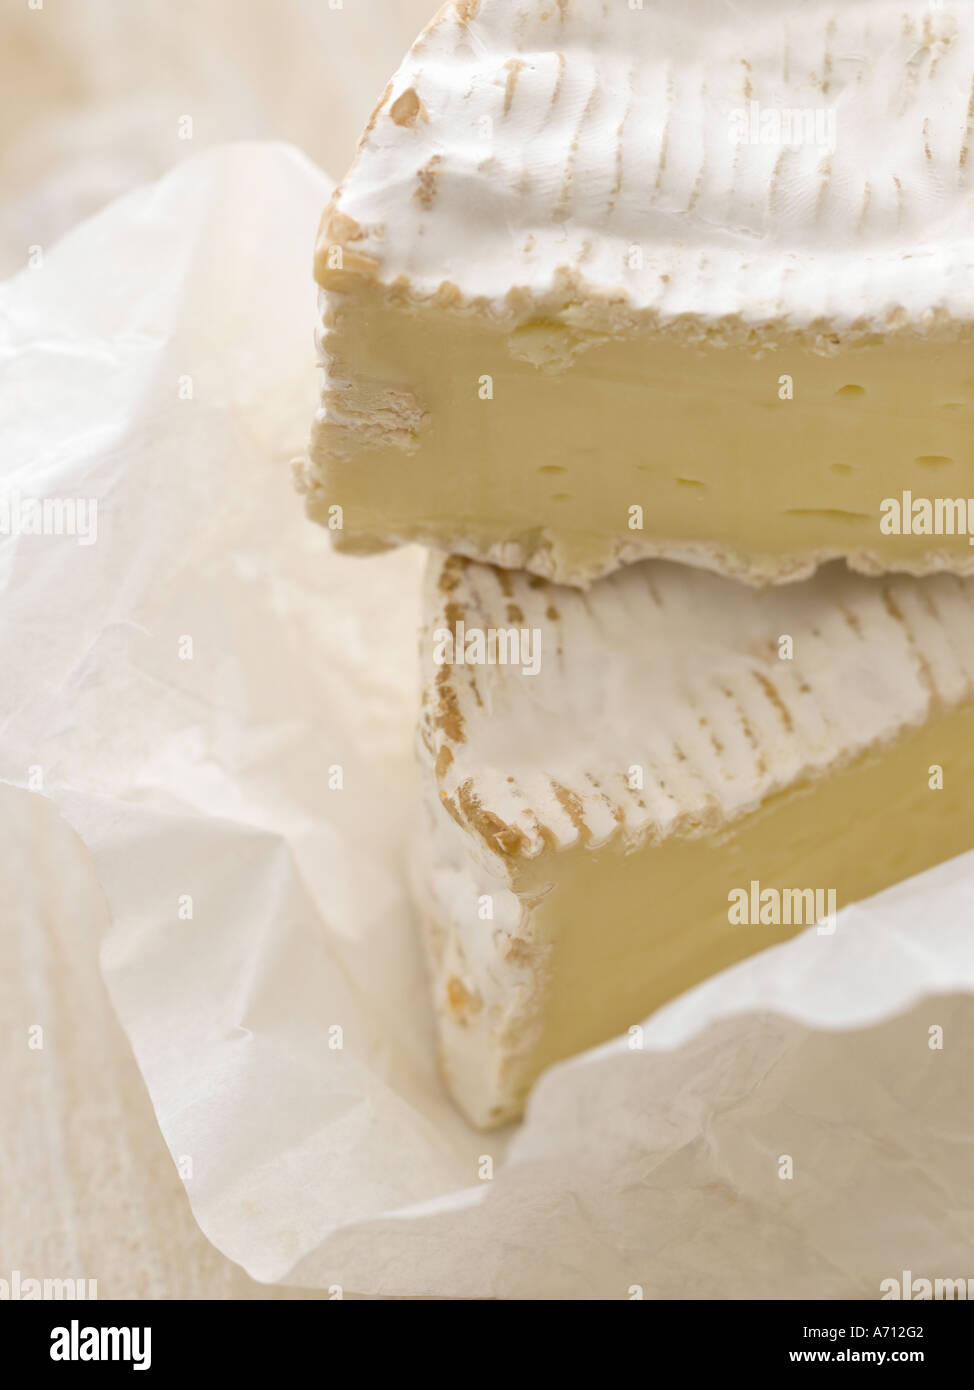 French camembert cheese Stock Photo